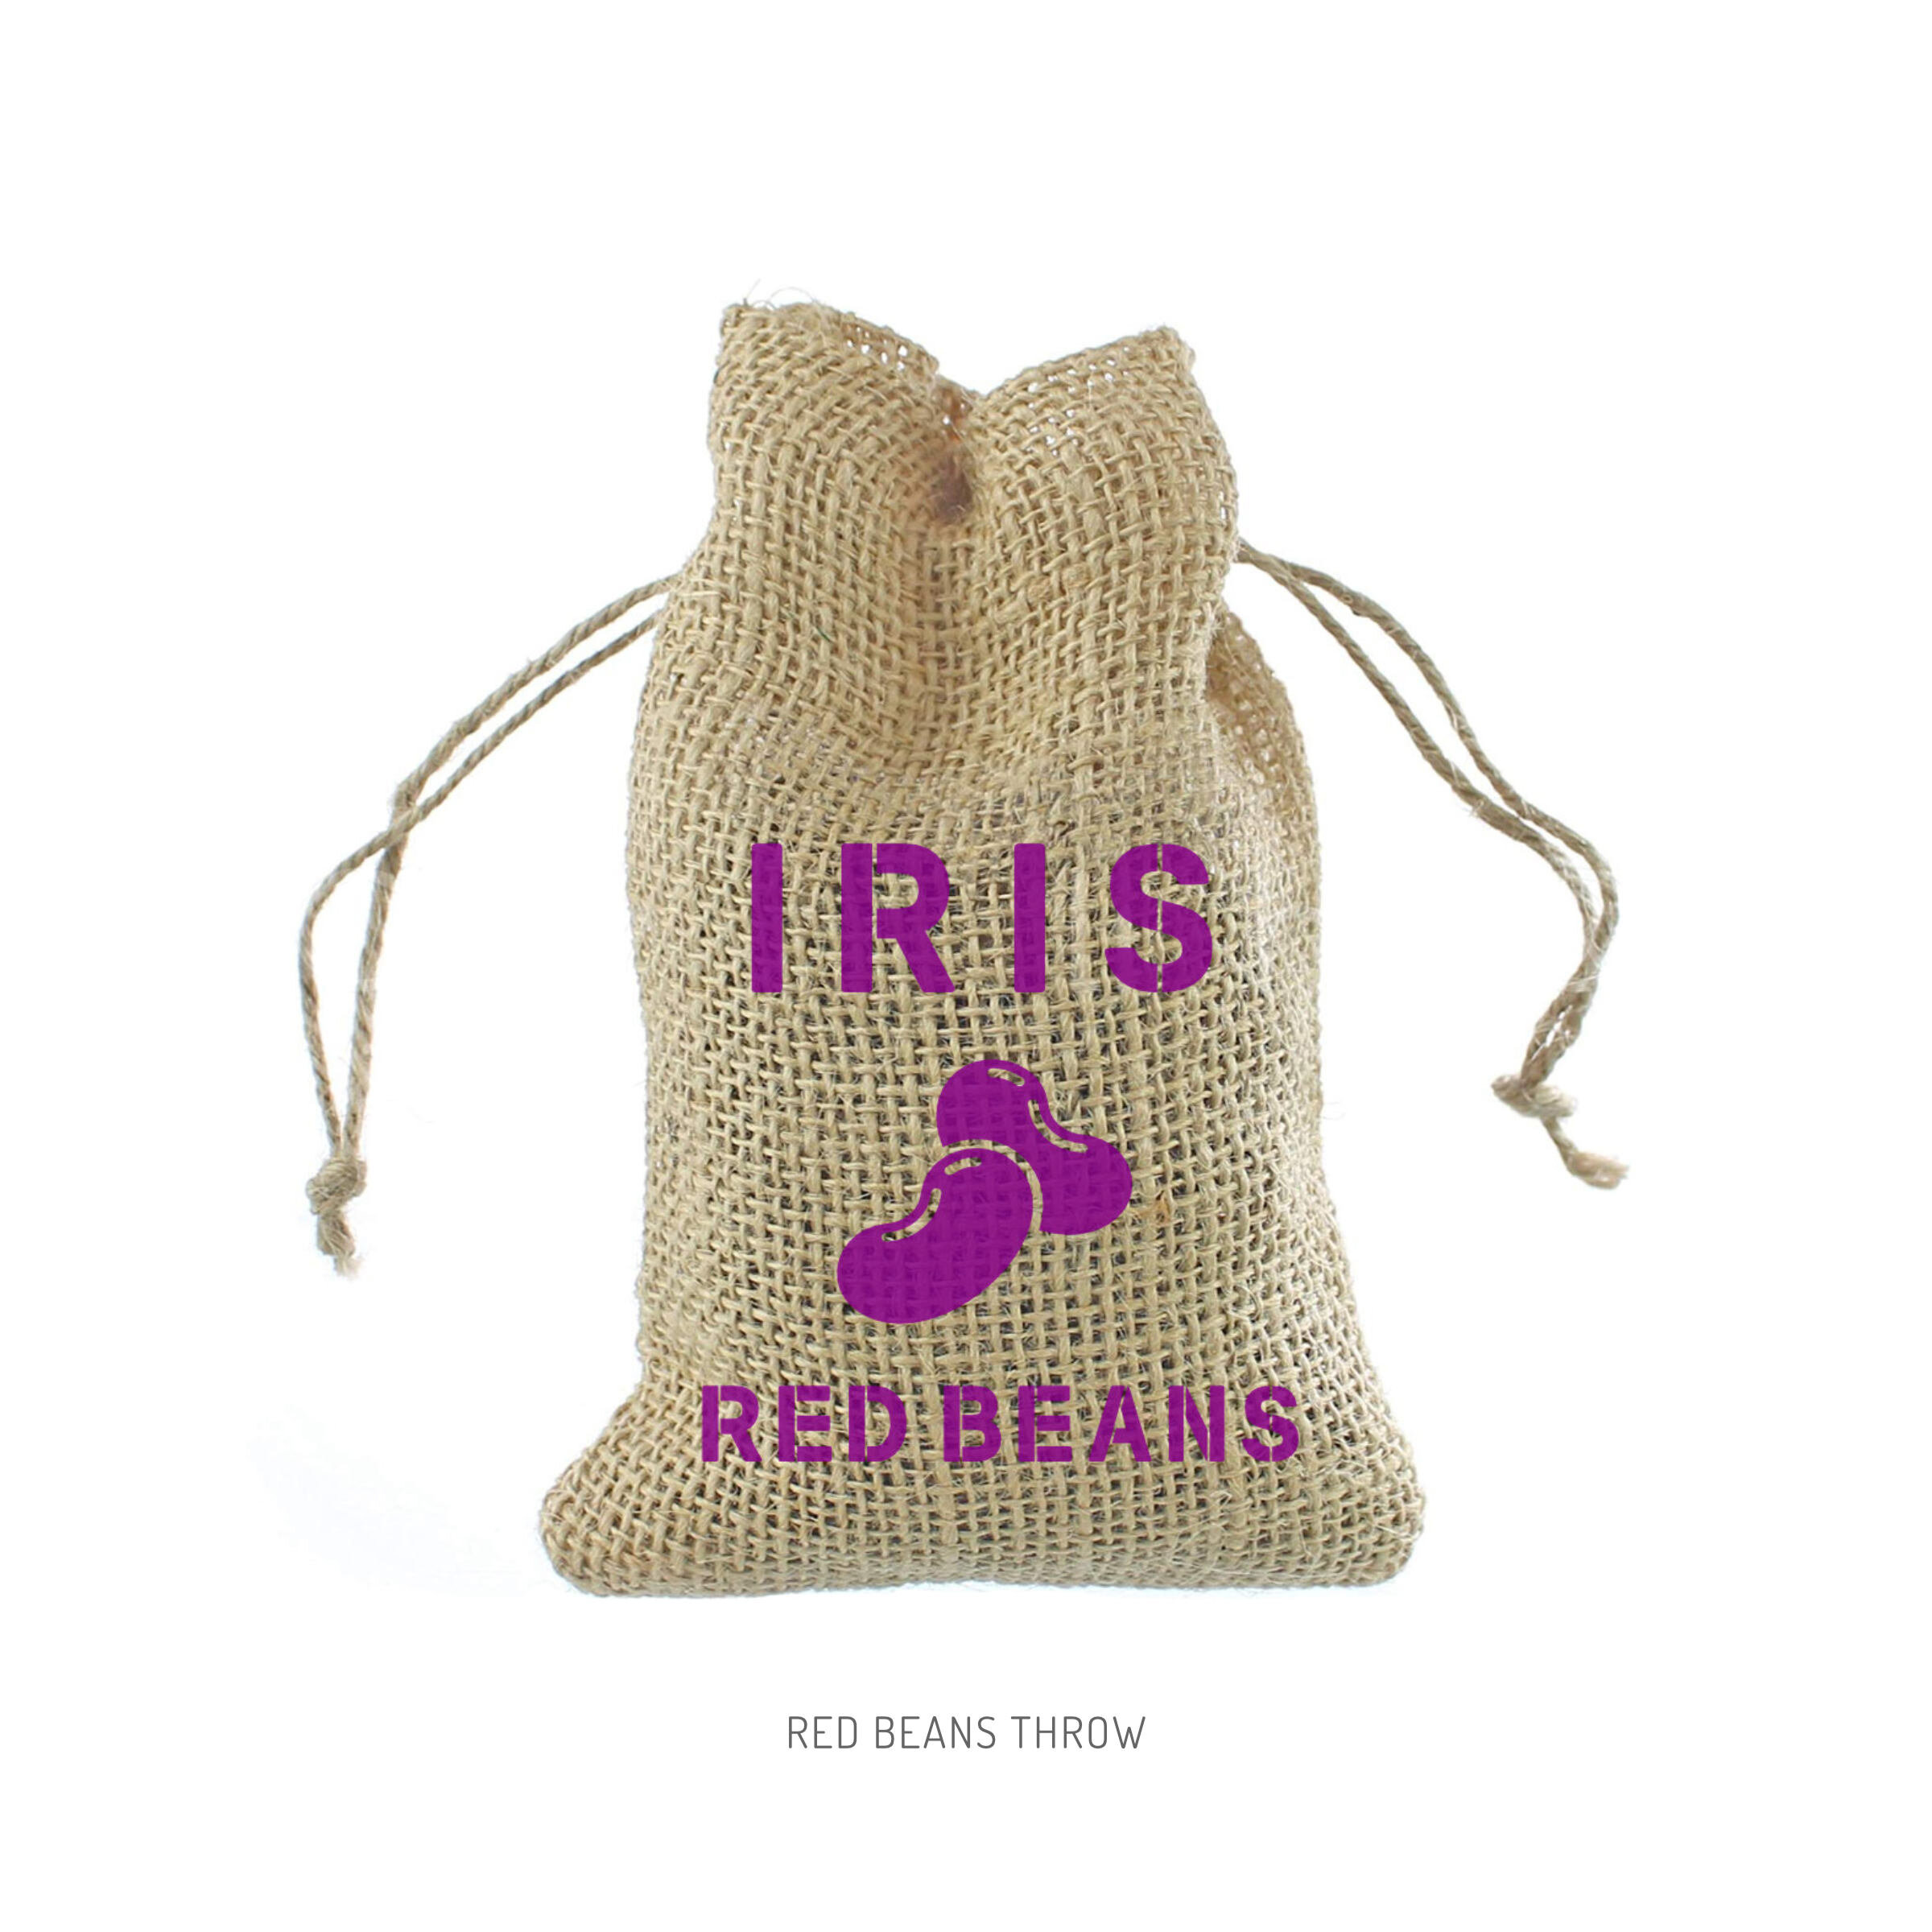 Iris Red Beans Throw.jpg